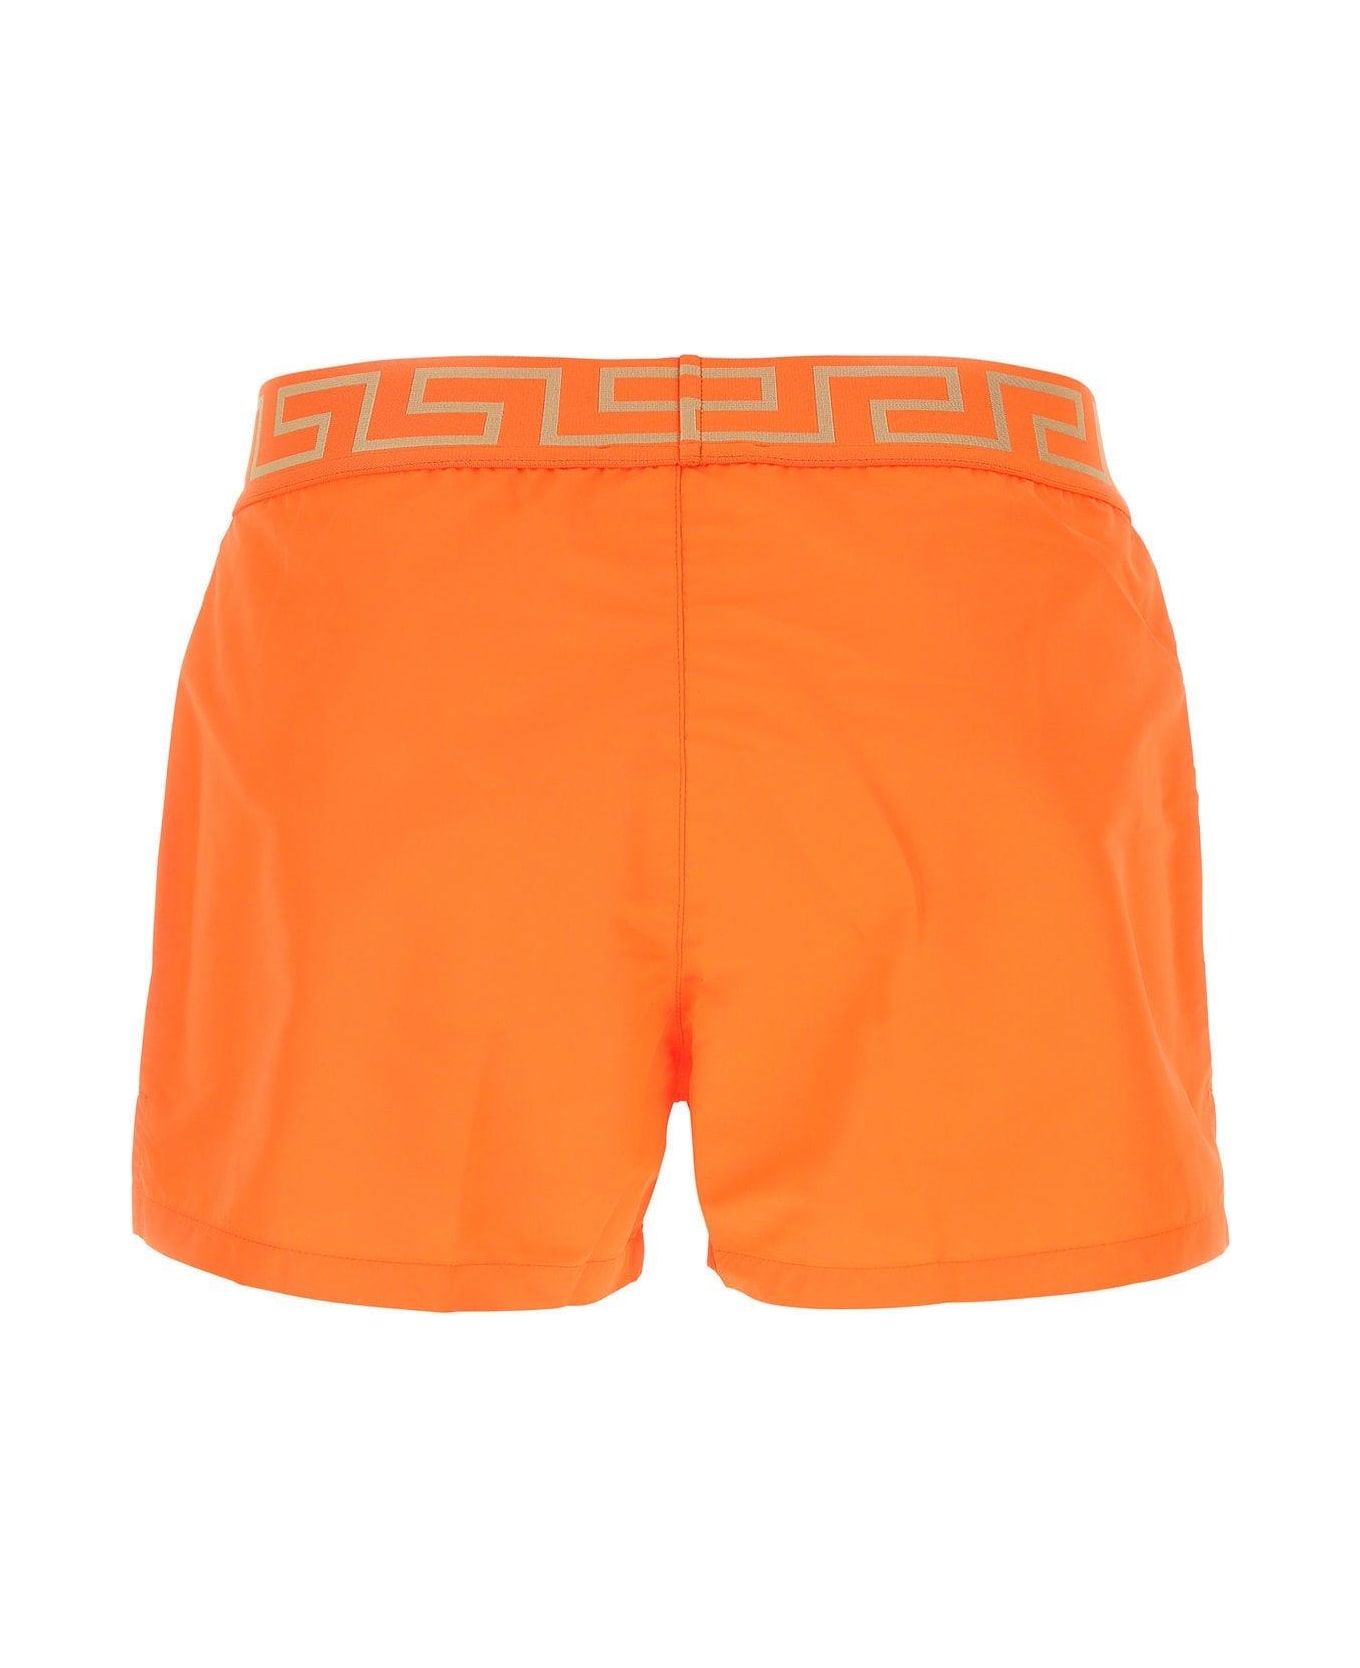 Versace Orange Polyester Swimming Shorts - Arancione ショートパンツ